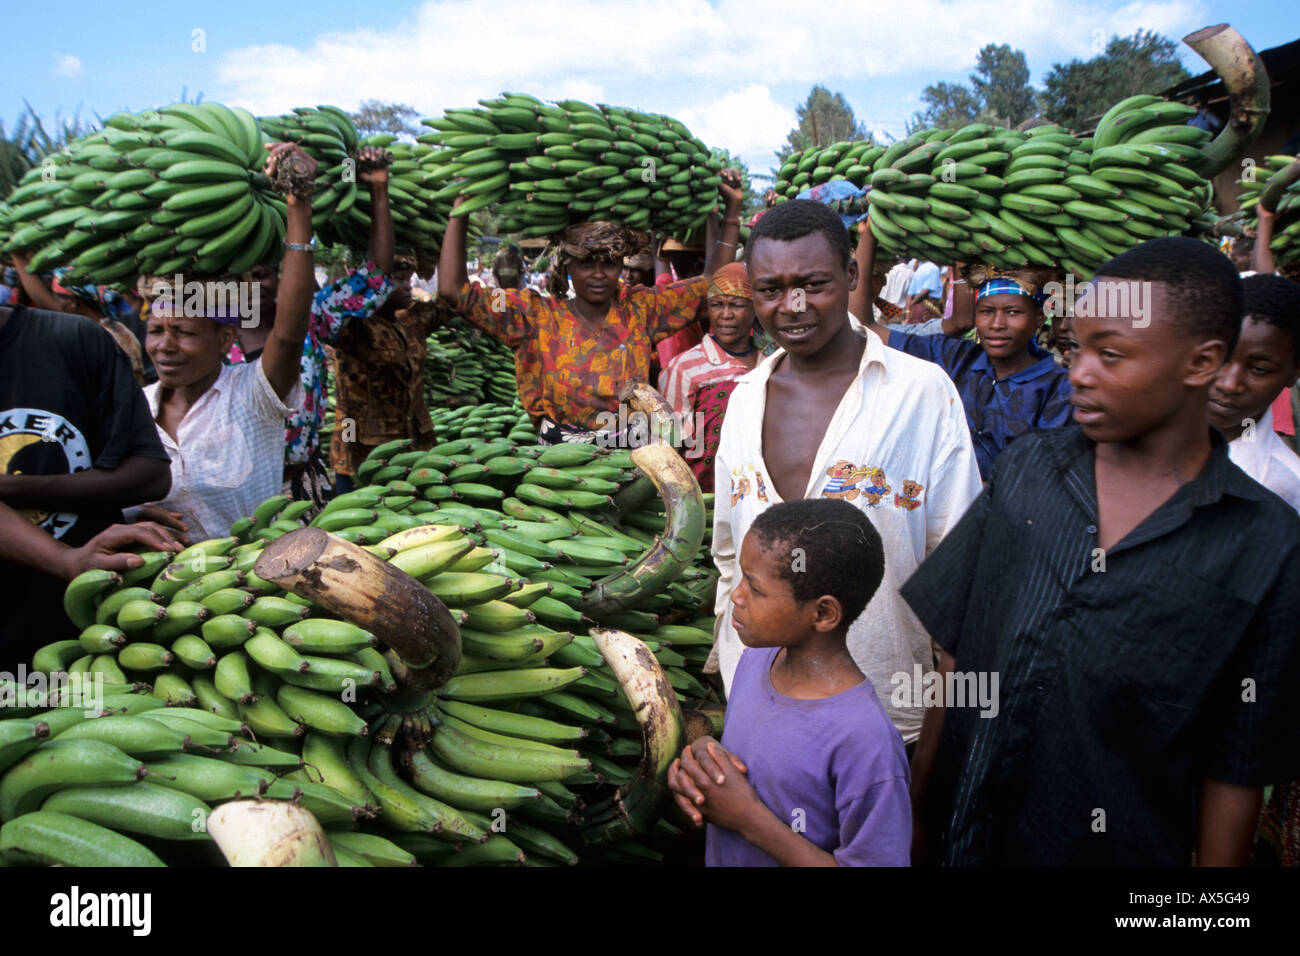 Busy market for cooking bananas in Mwika Village, Kilimanjaro, Tanzania. Stock Photo